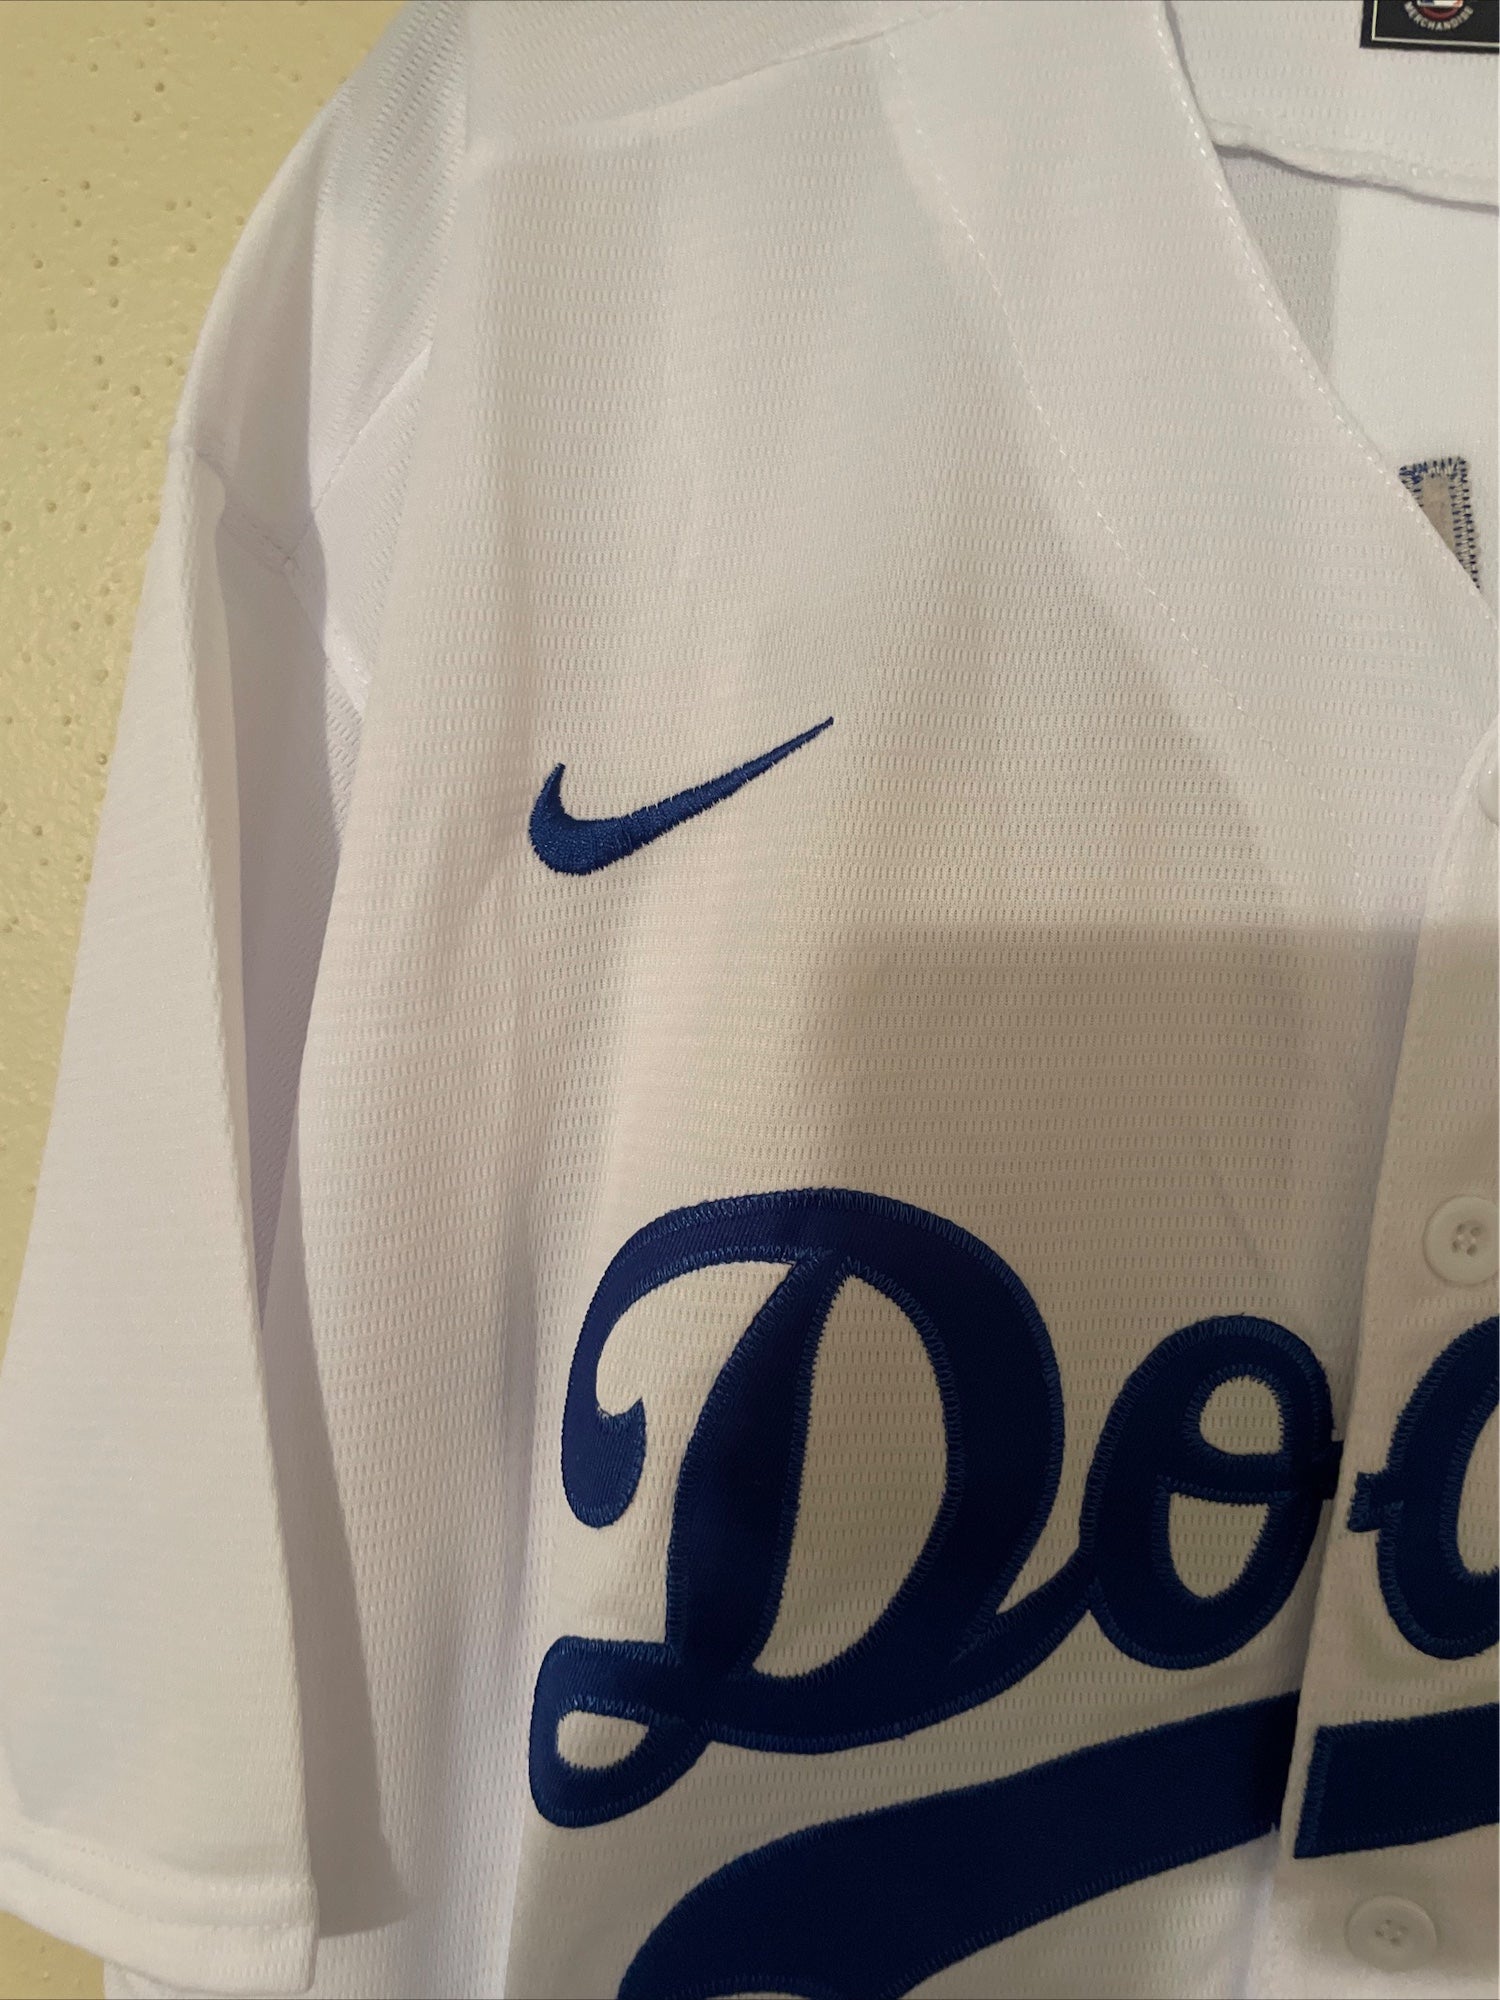 Los Angeles Dodgers Nike White Home Custom MLB Replica Jersey